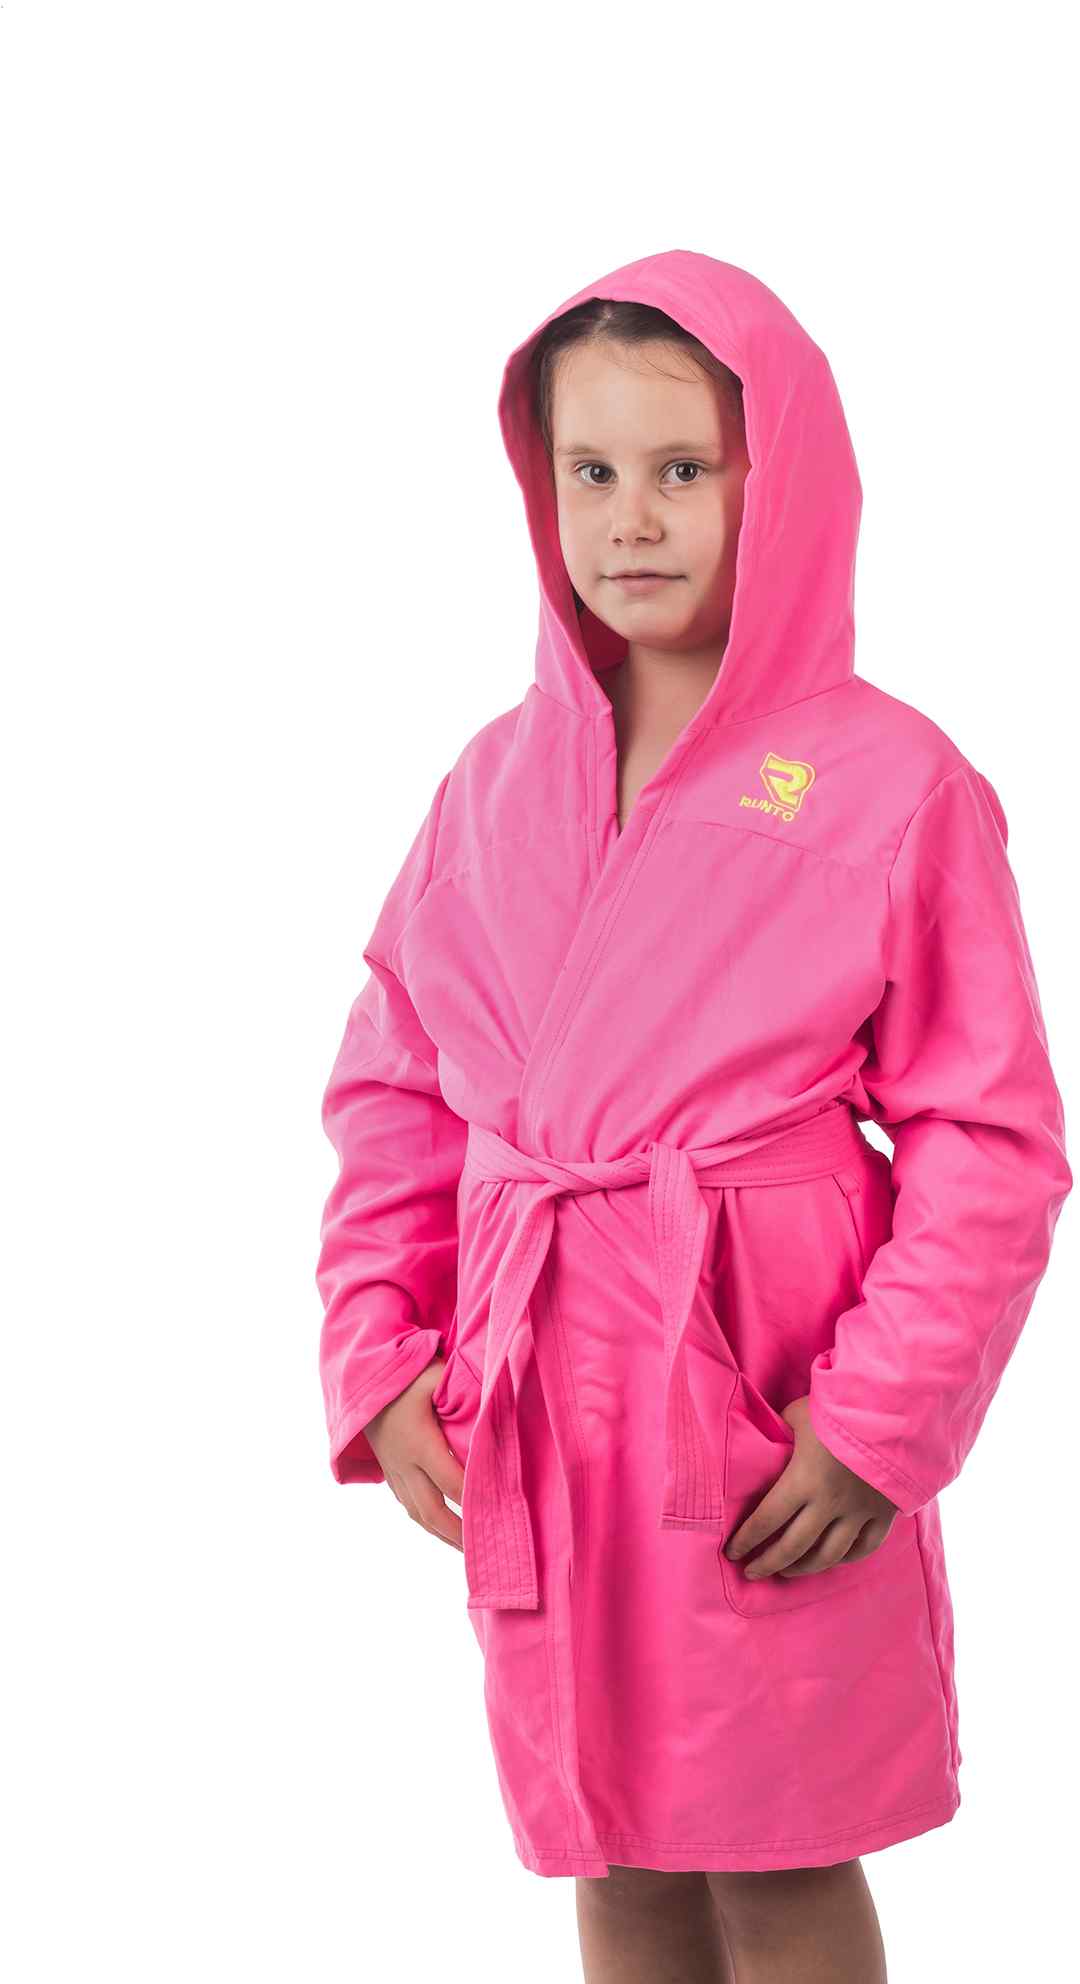 Children’s bathrobe